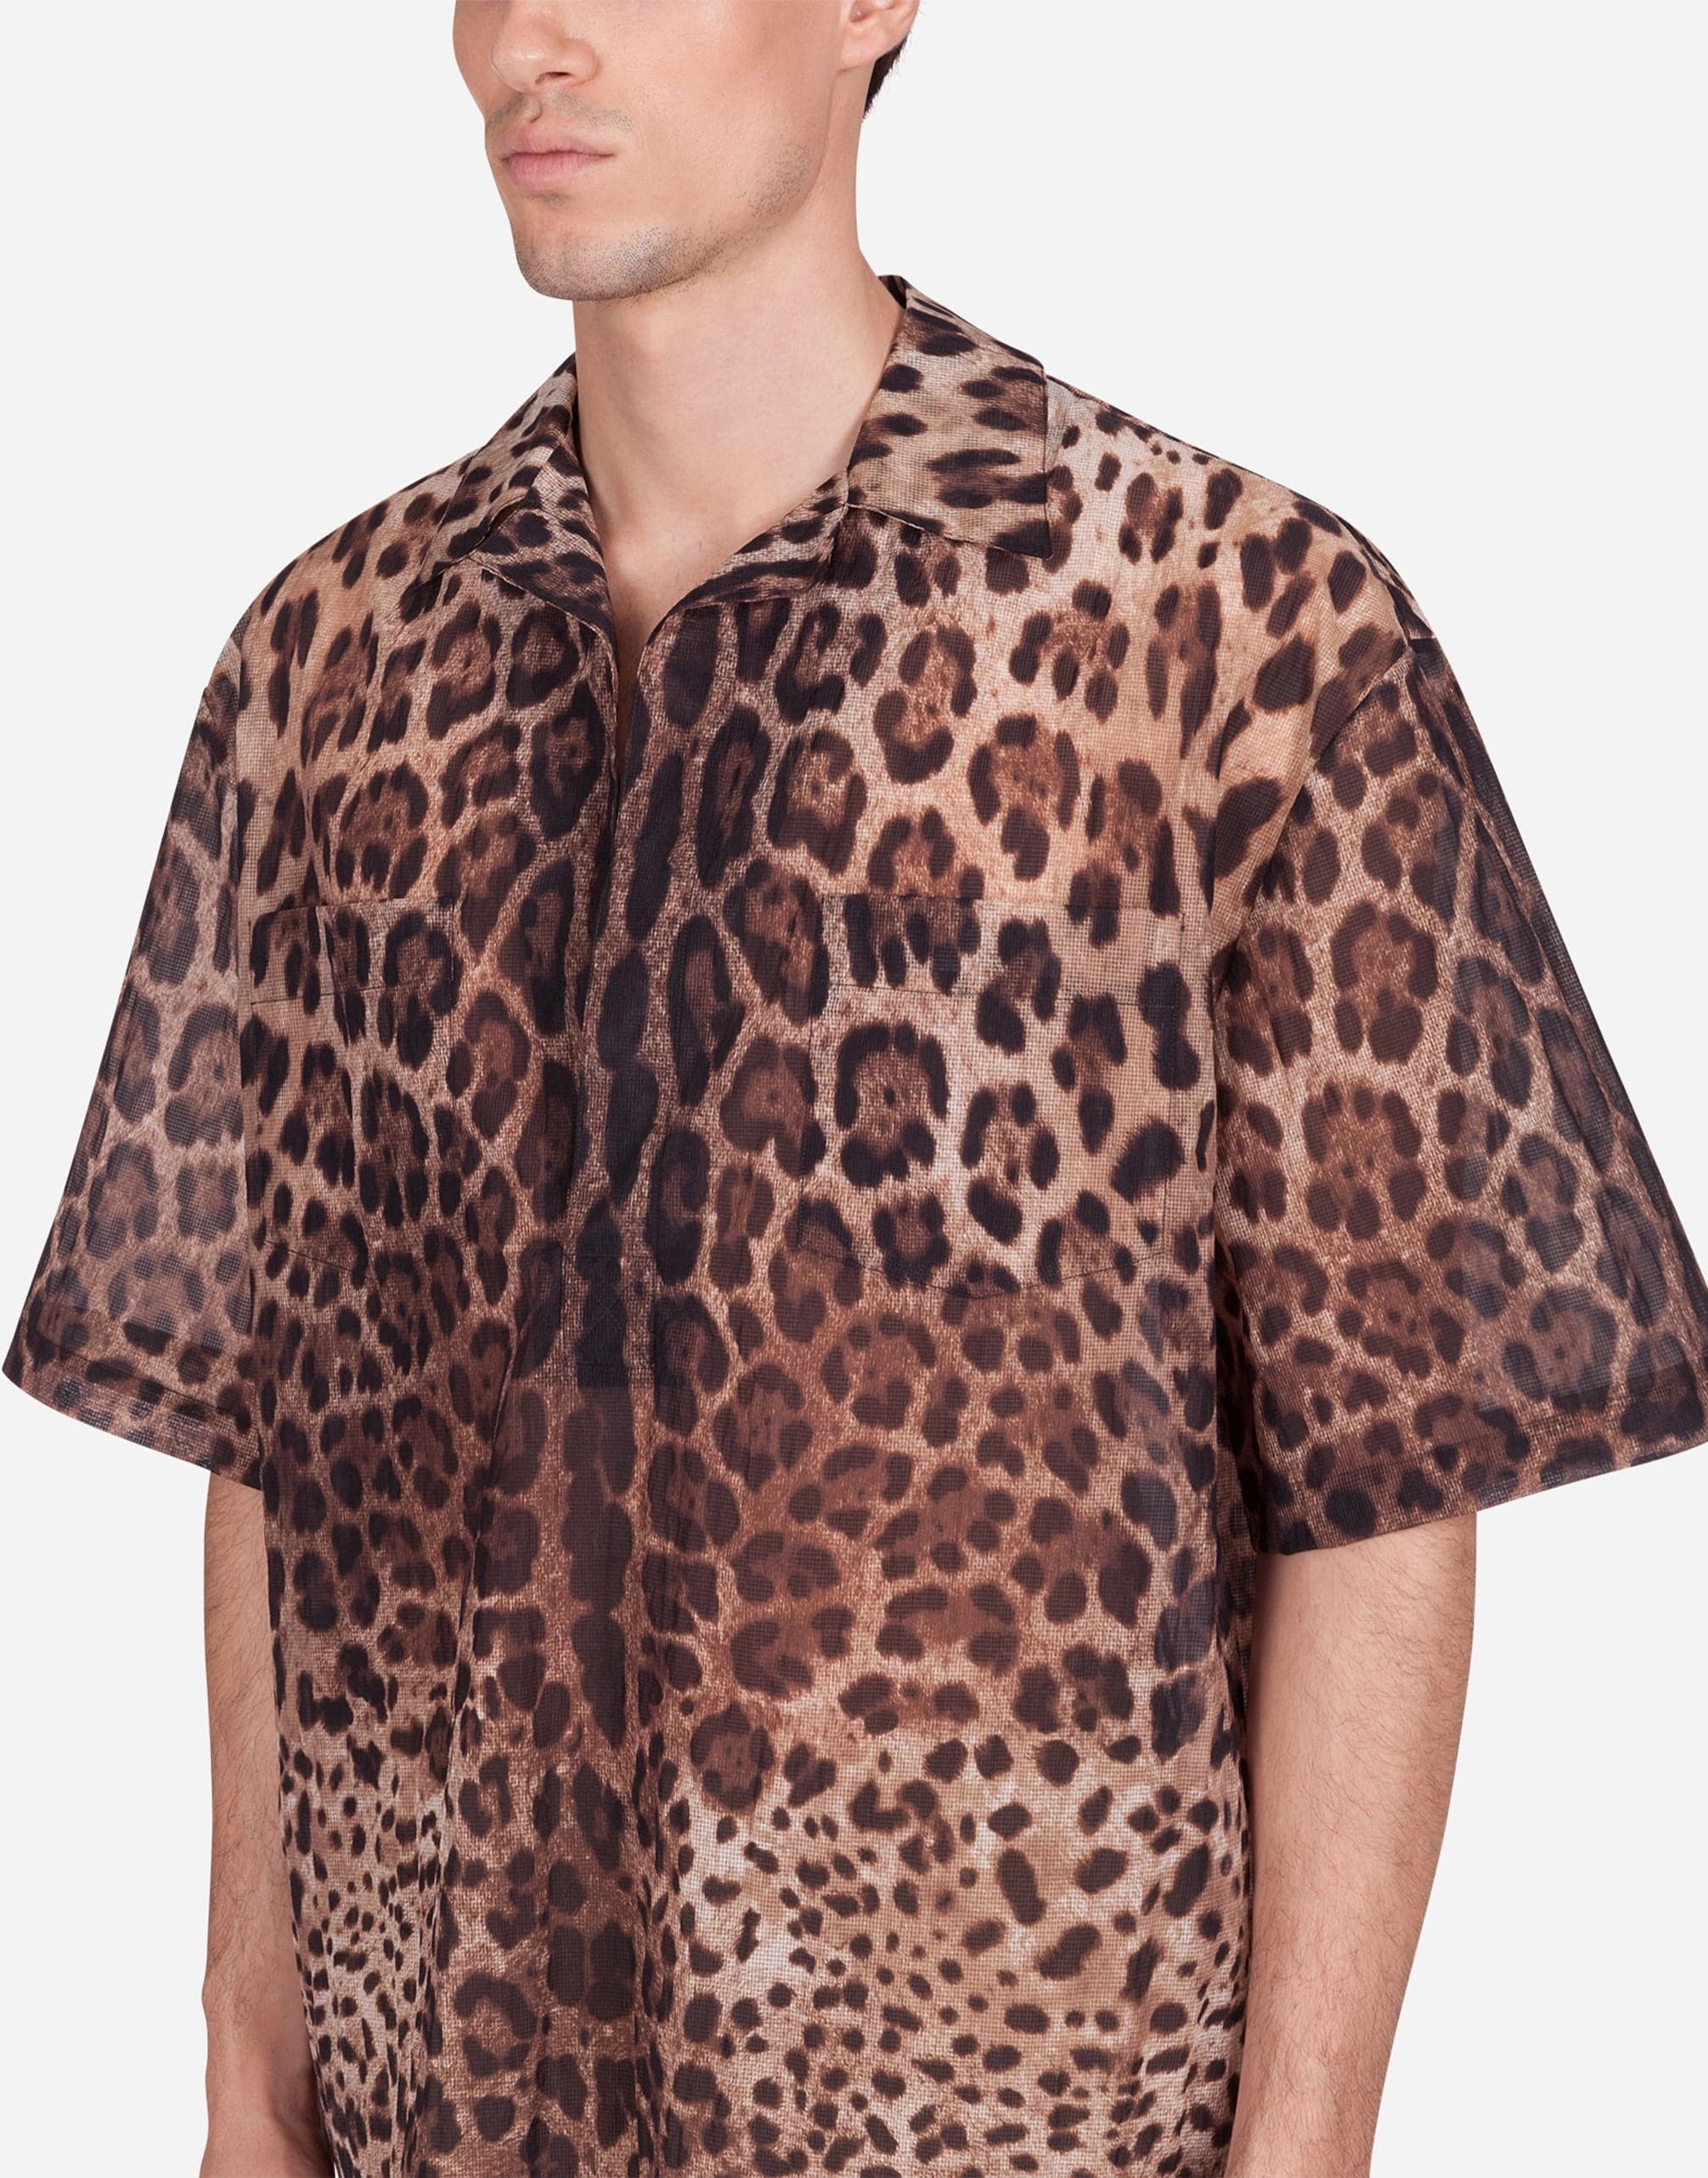 Dolce & Gabbana Leopard Print Bowling Shirt